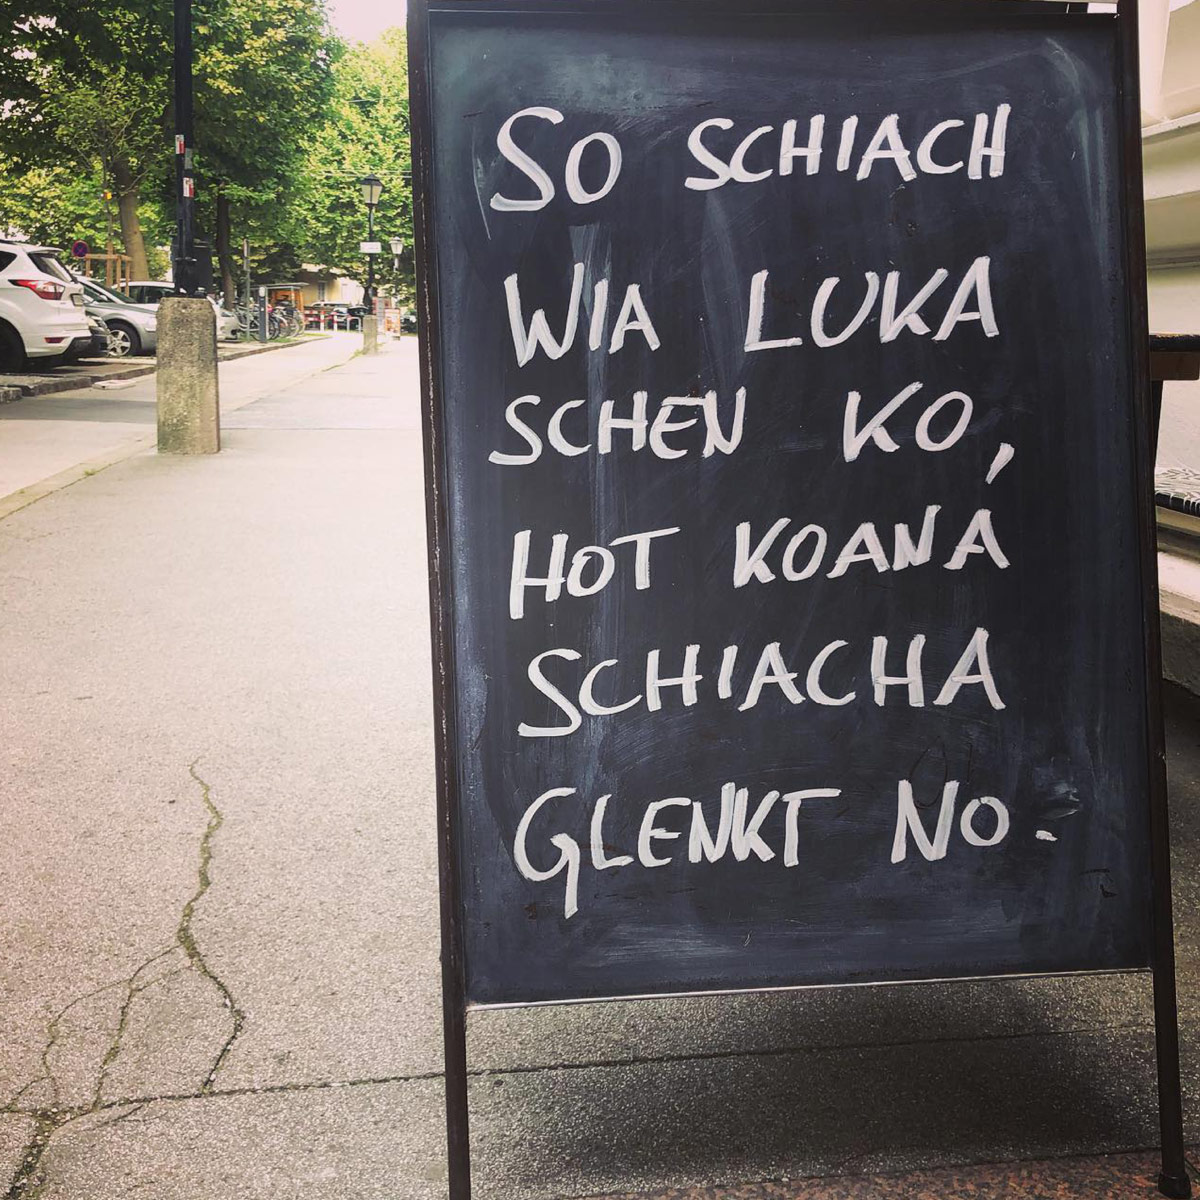 So Schiach Wia Luka Schen Ko, Hot Koana Schiacha Glenkt No.